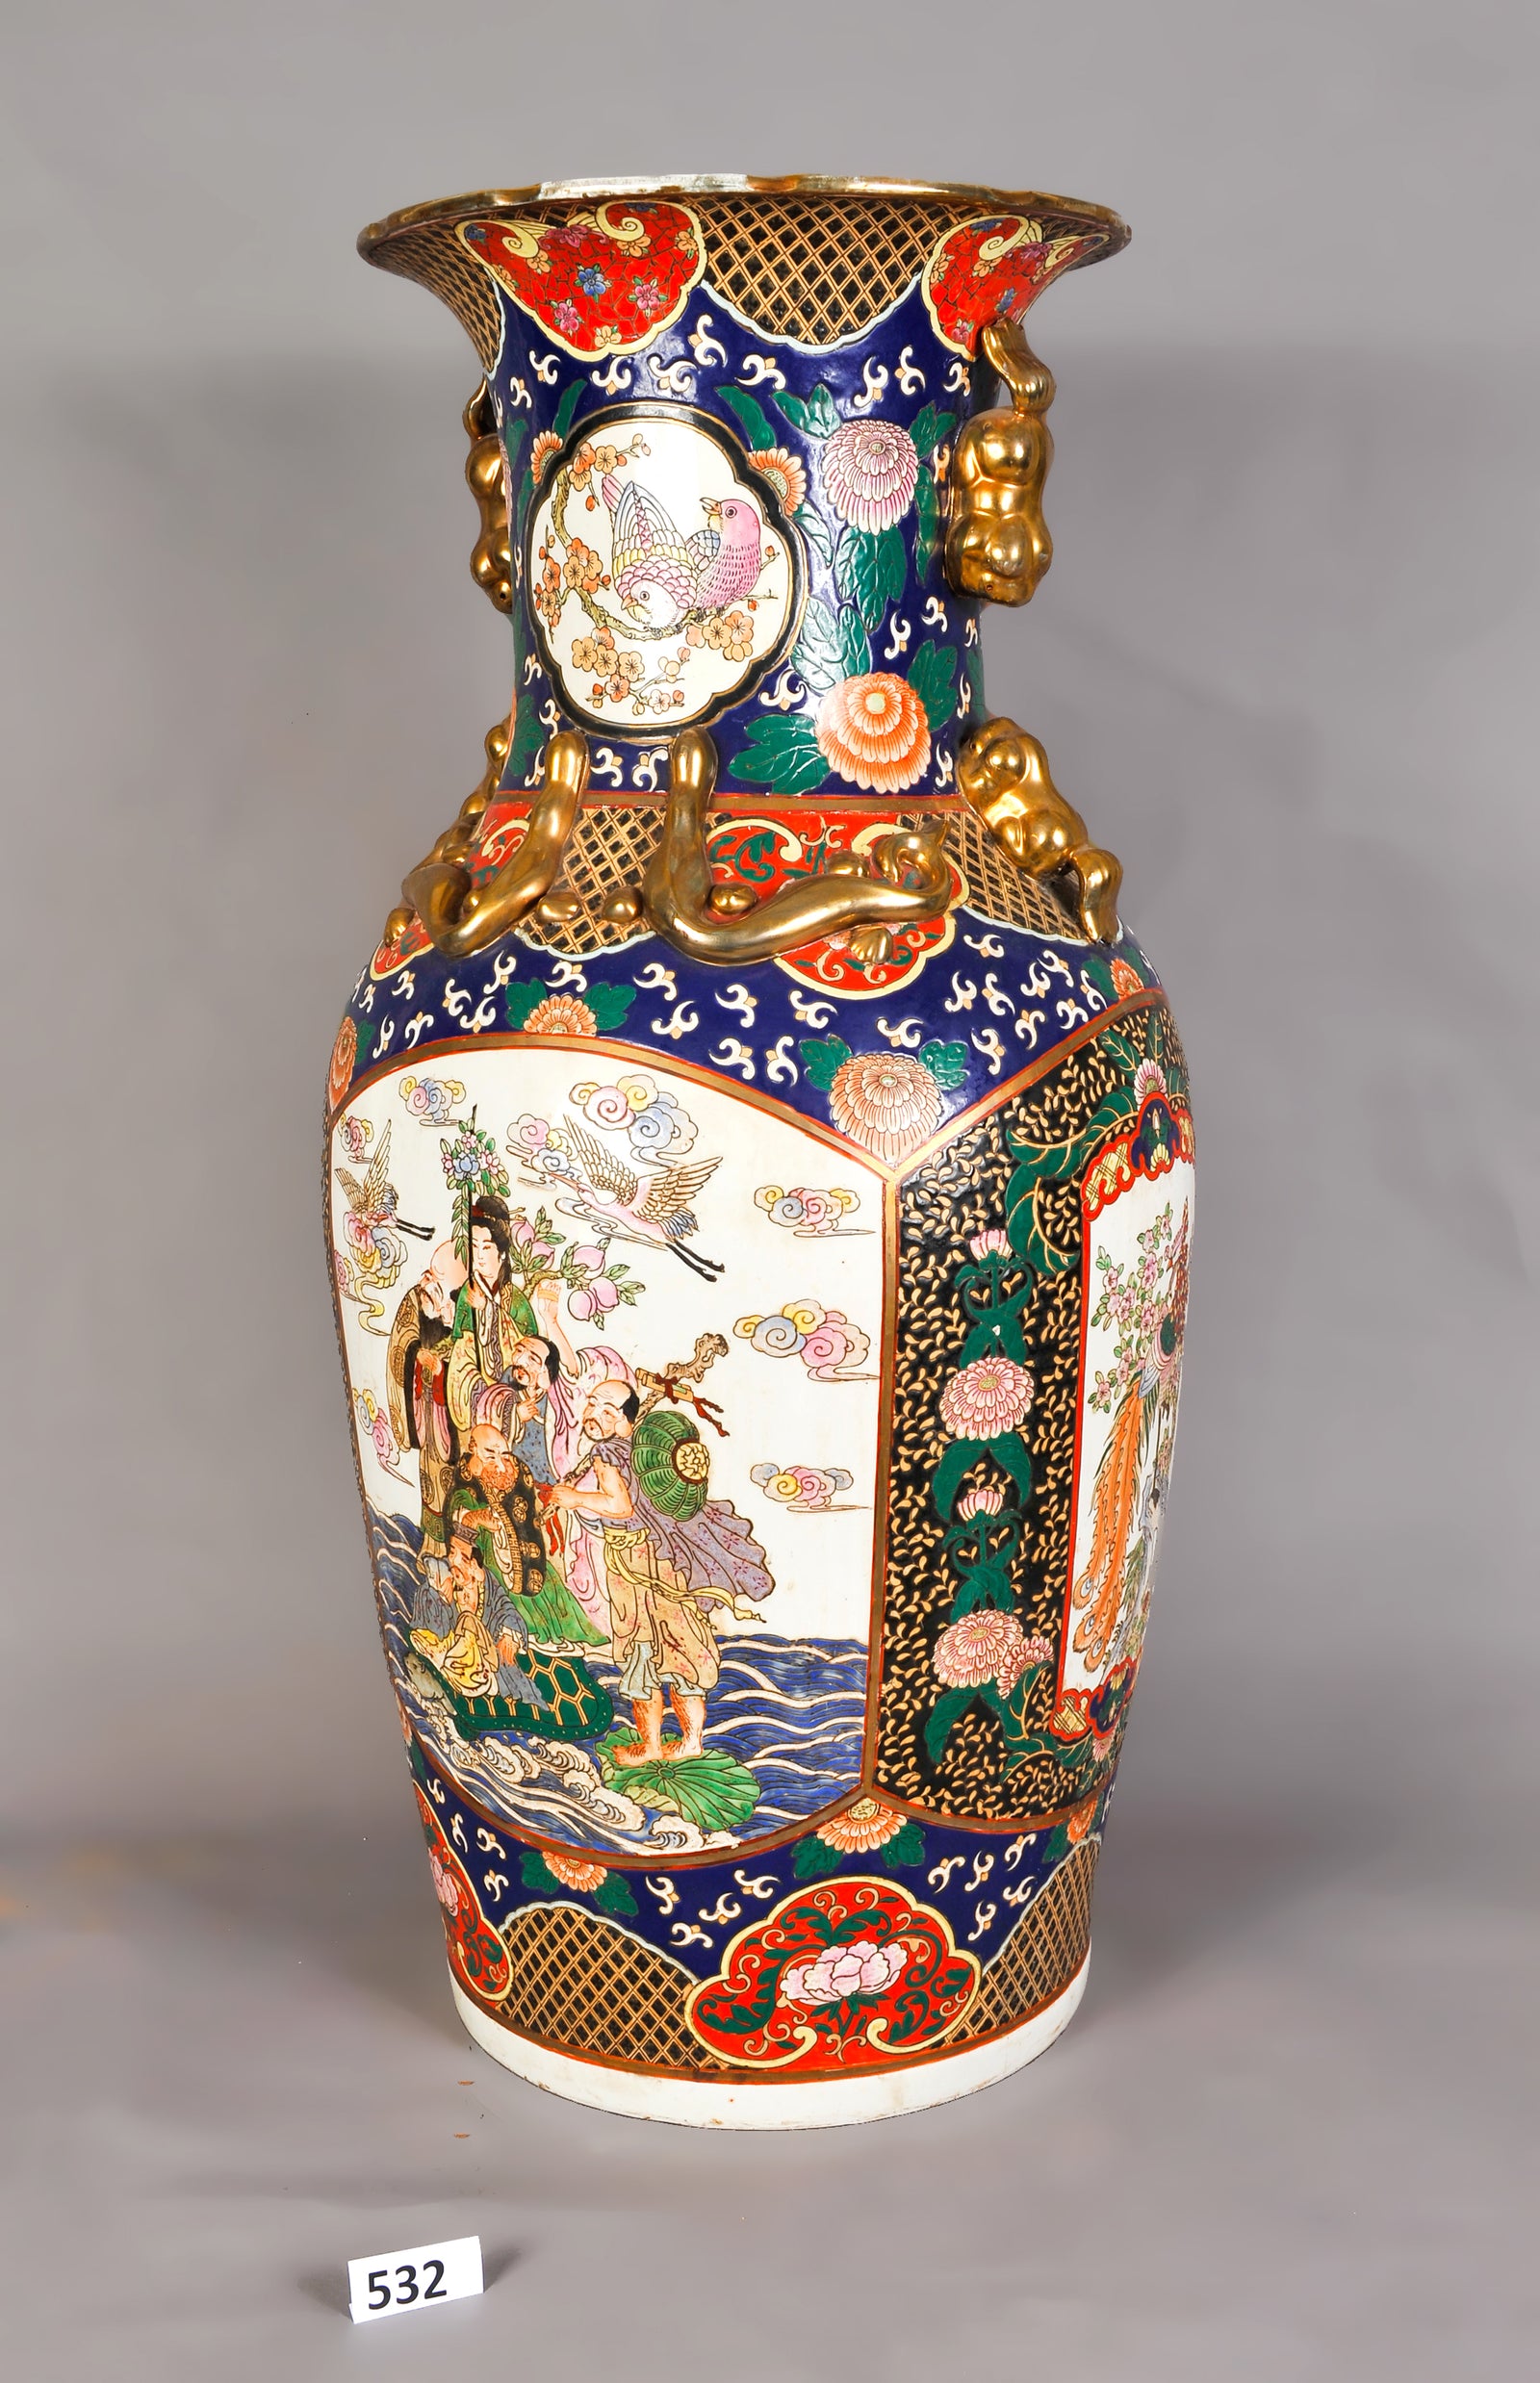 Antique Chinese Floor Vase